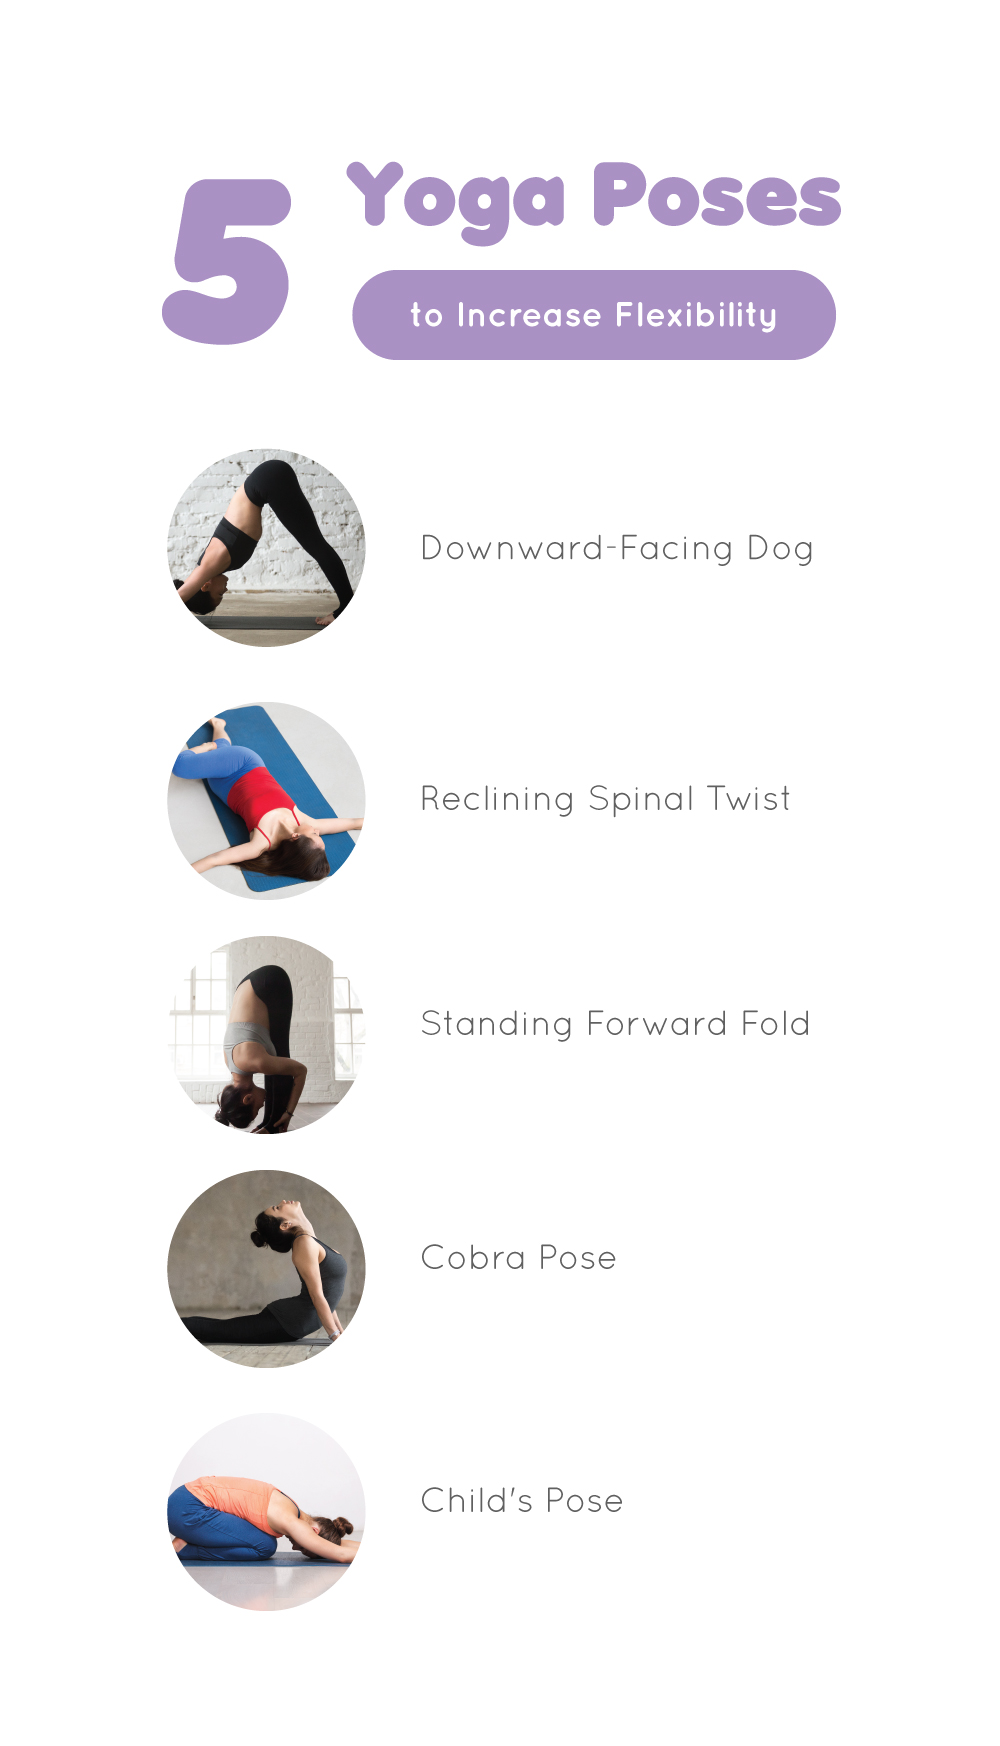 5 Yoga Poses to Increase Flexibility